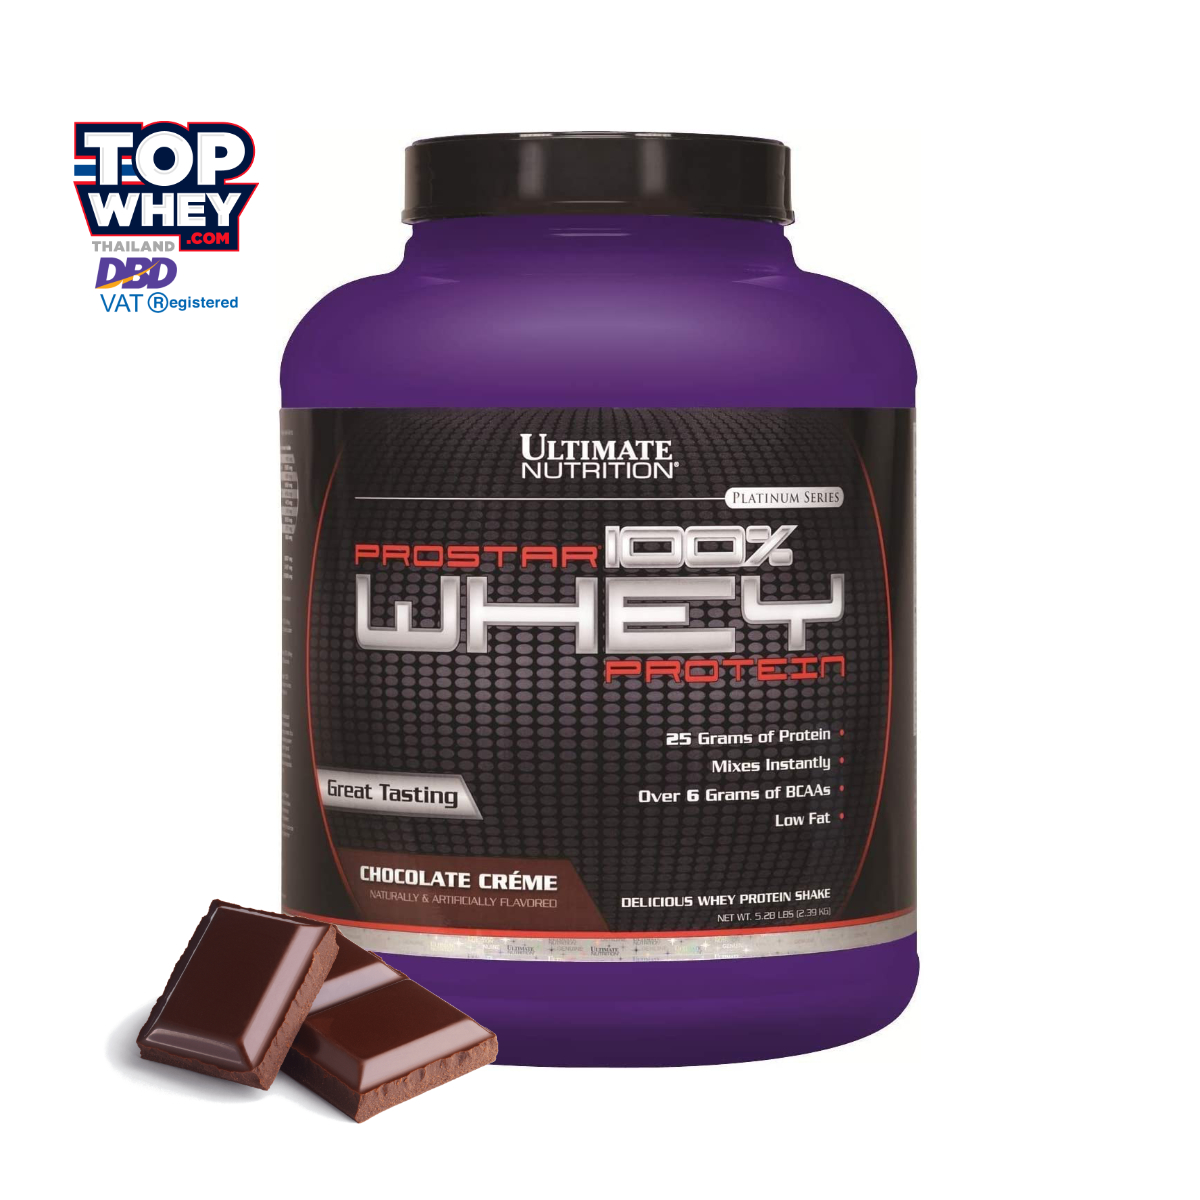 Ultimate Nutrition ProStar Whey Protein 5.28lbs – Chocolate – เวย์โปรตีนเสริมสร้างกล้ามเนื้อ   ฟื้นฟู-ซ่อมแซมกล้ามเนื้อที่สึกหรอ  มีกรดอะมิโนจำเป็นมากกว่า 20 ชนิด  สามารถทานระหว่างมื้ออาหาร ก่อน-หลังออกกำลังกาย